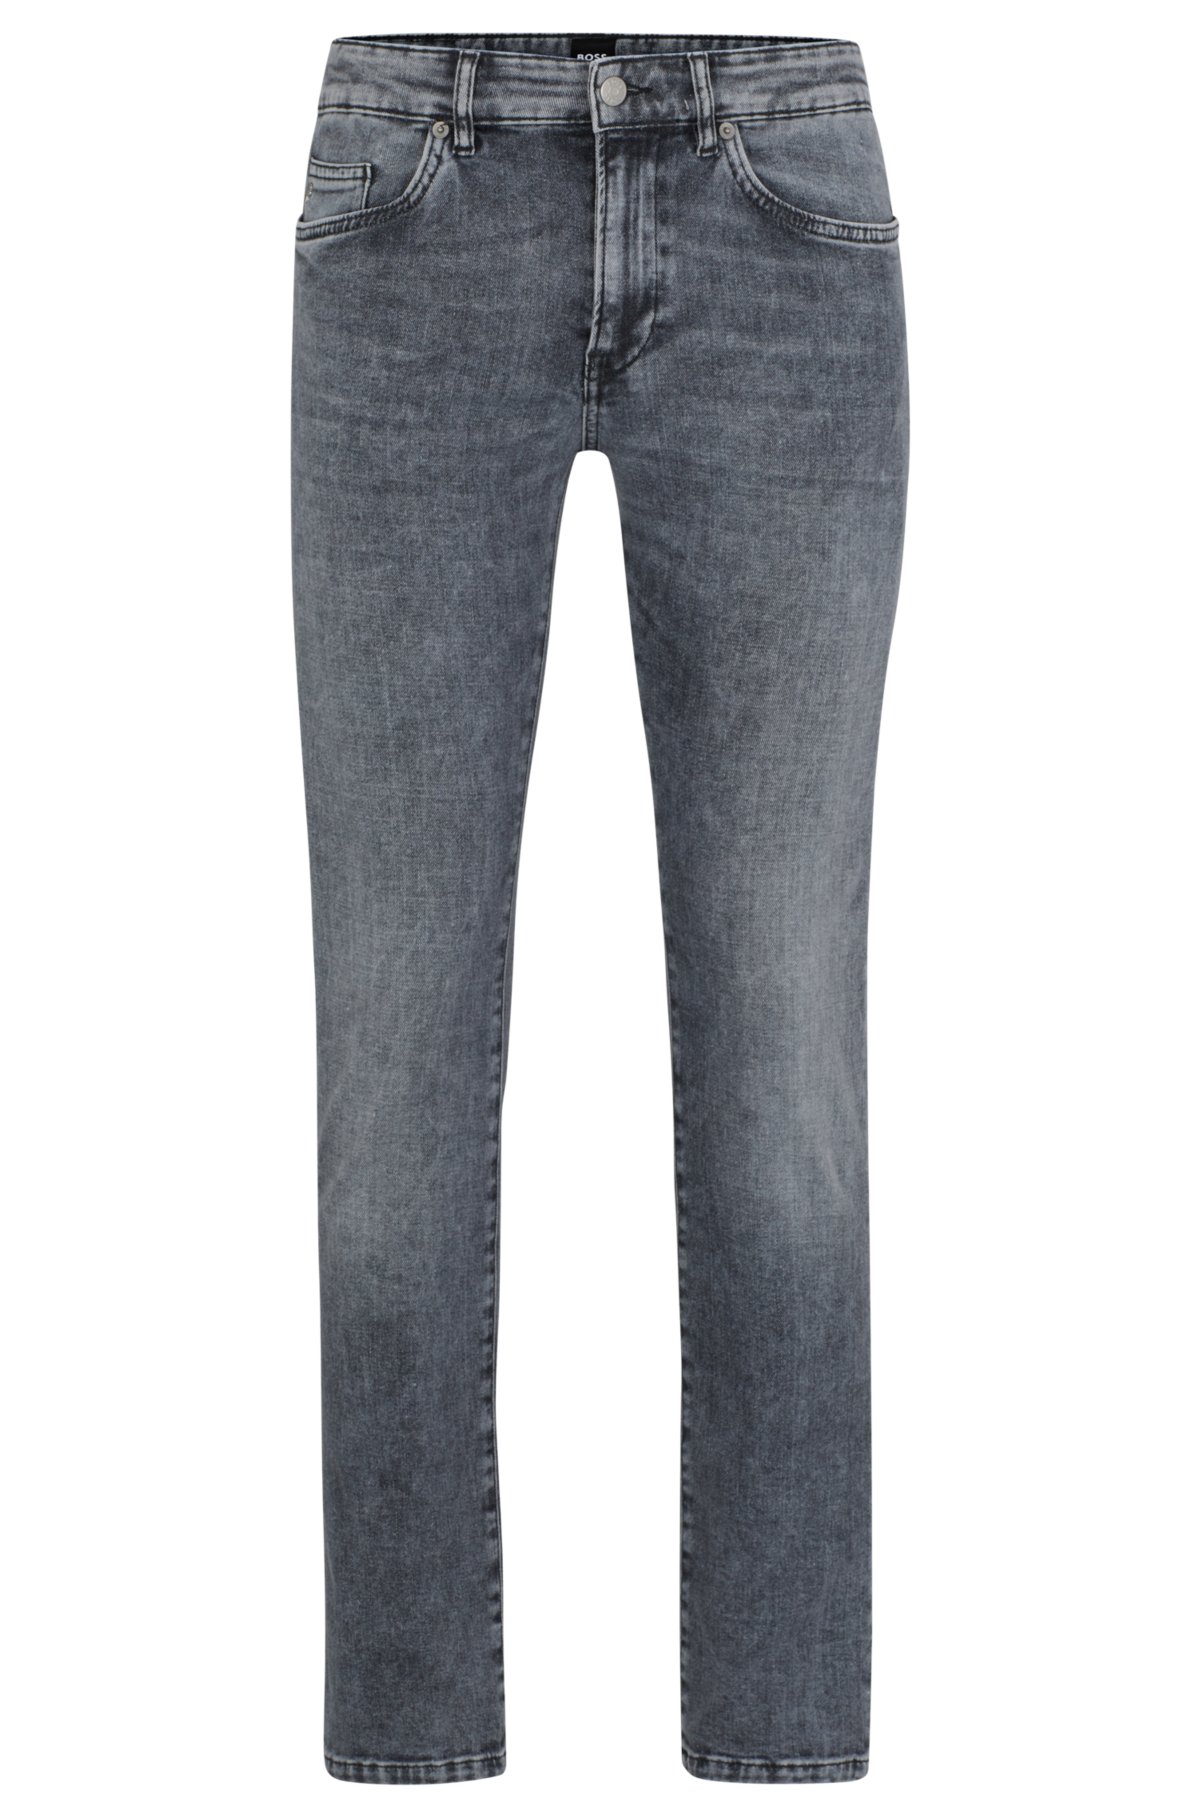 BOSS - Slim-fit in stretch stonewashed denim Italian gray jeans